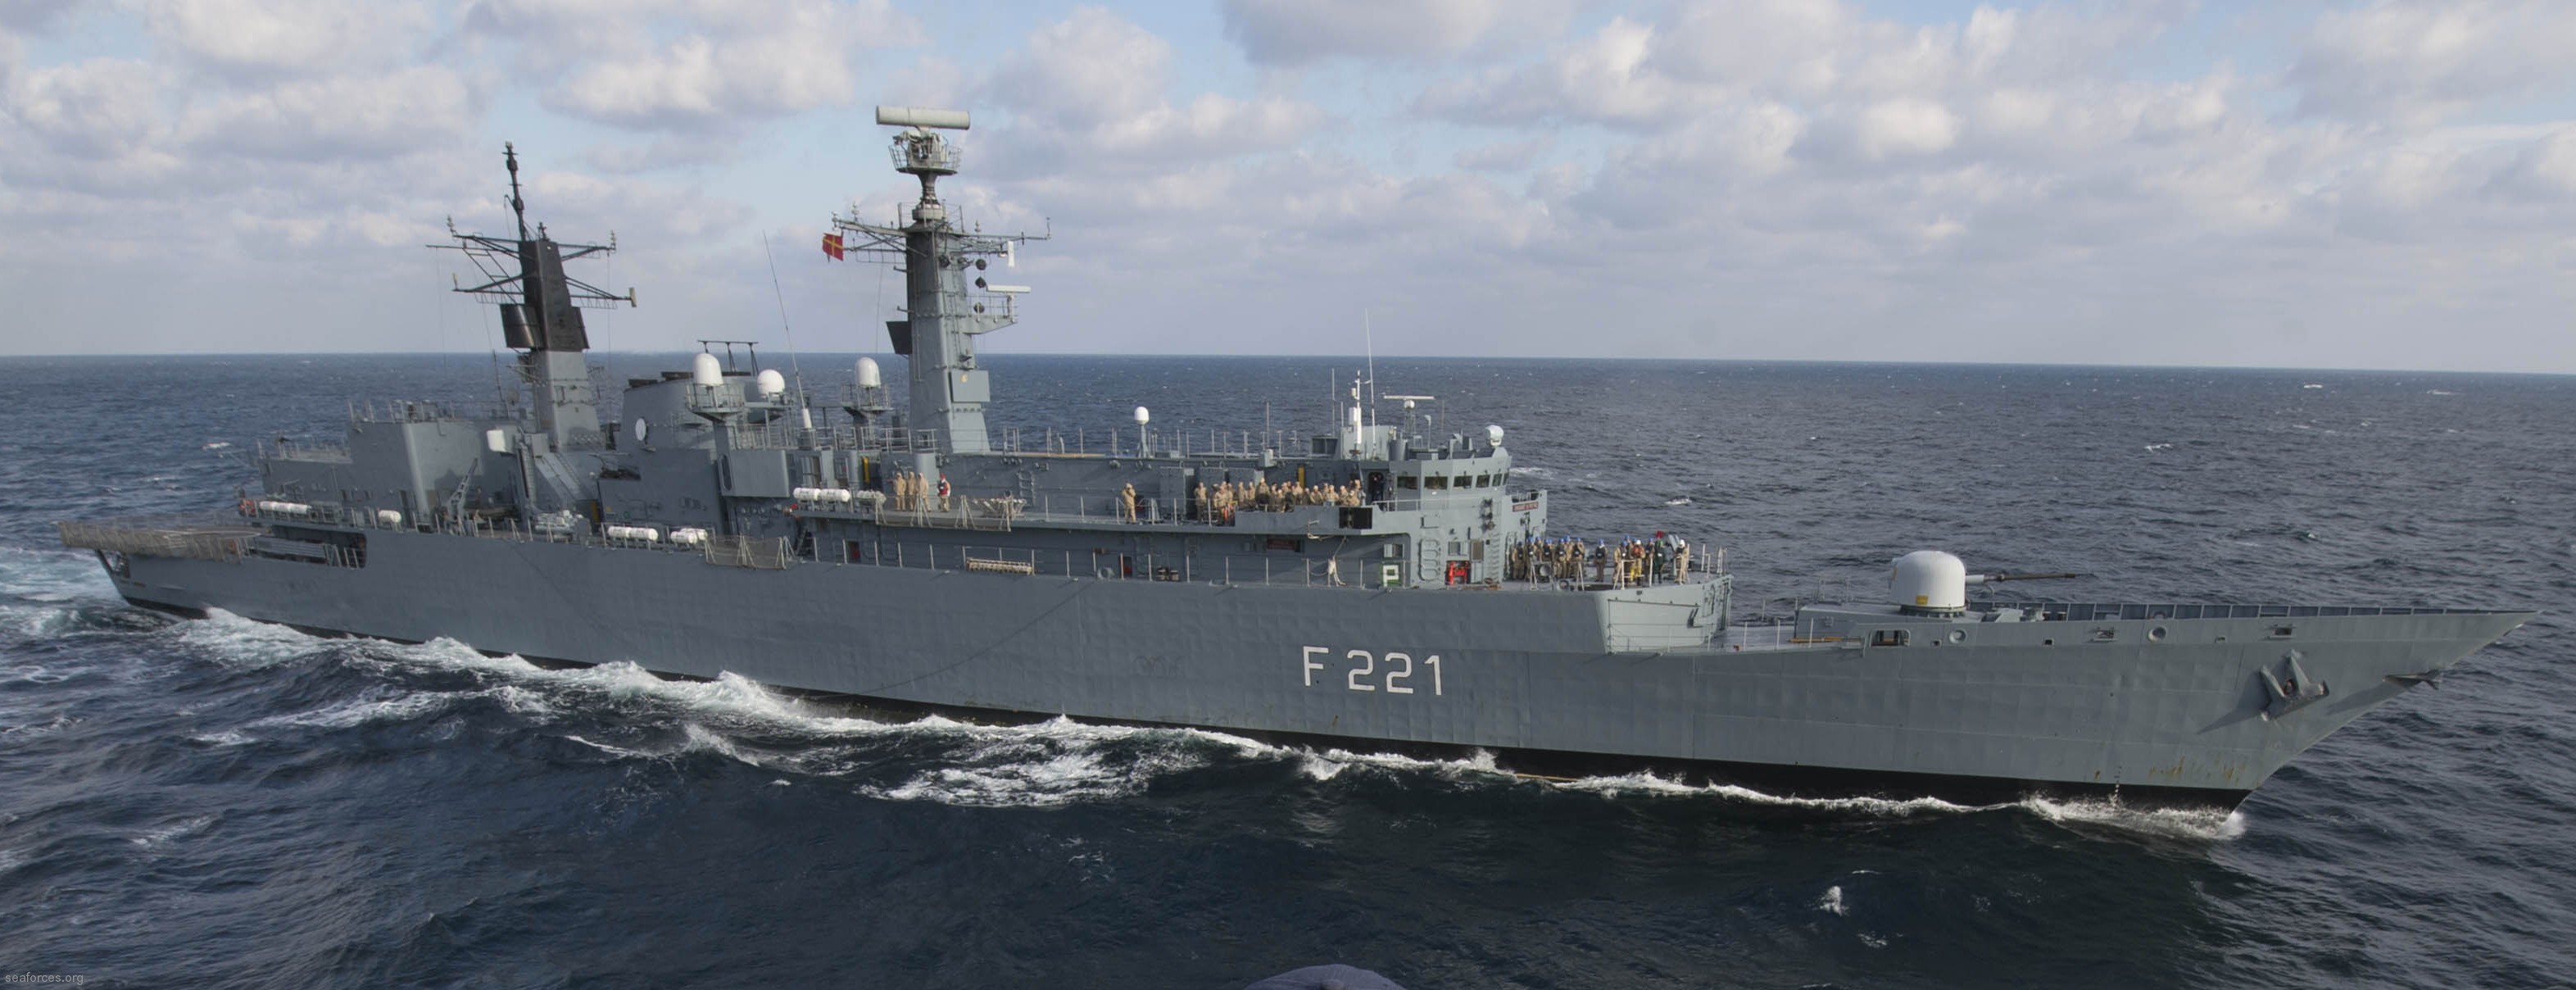 f-221 ros regele ferdinand frigate romanian navy type 22 broadsword class 23